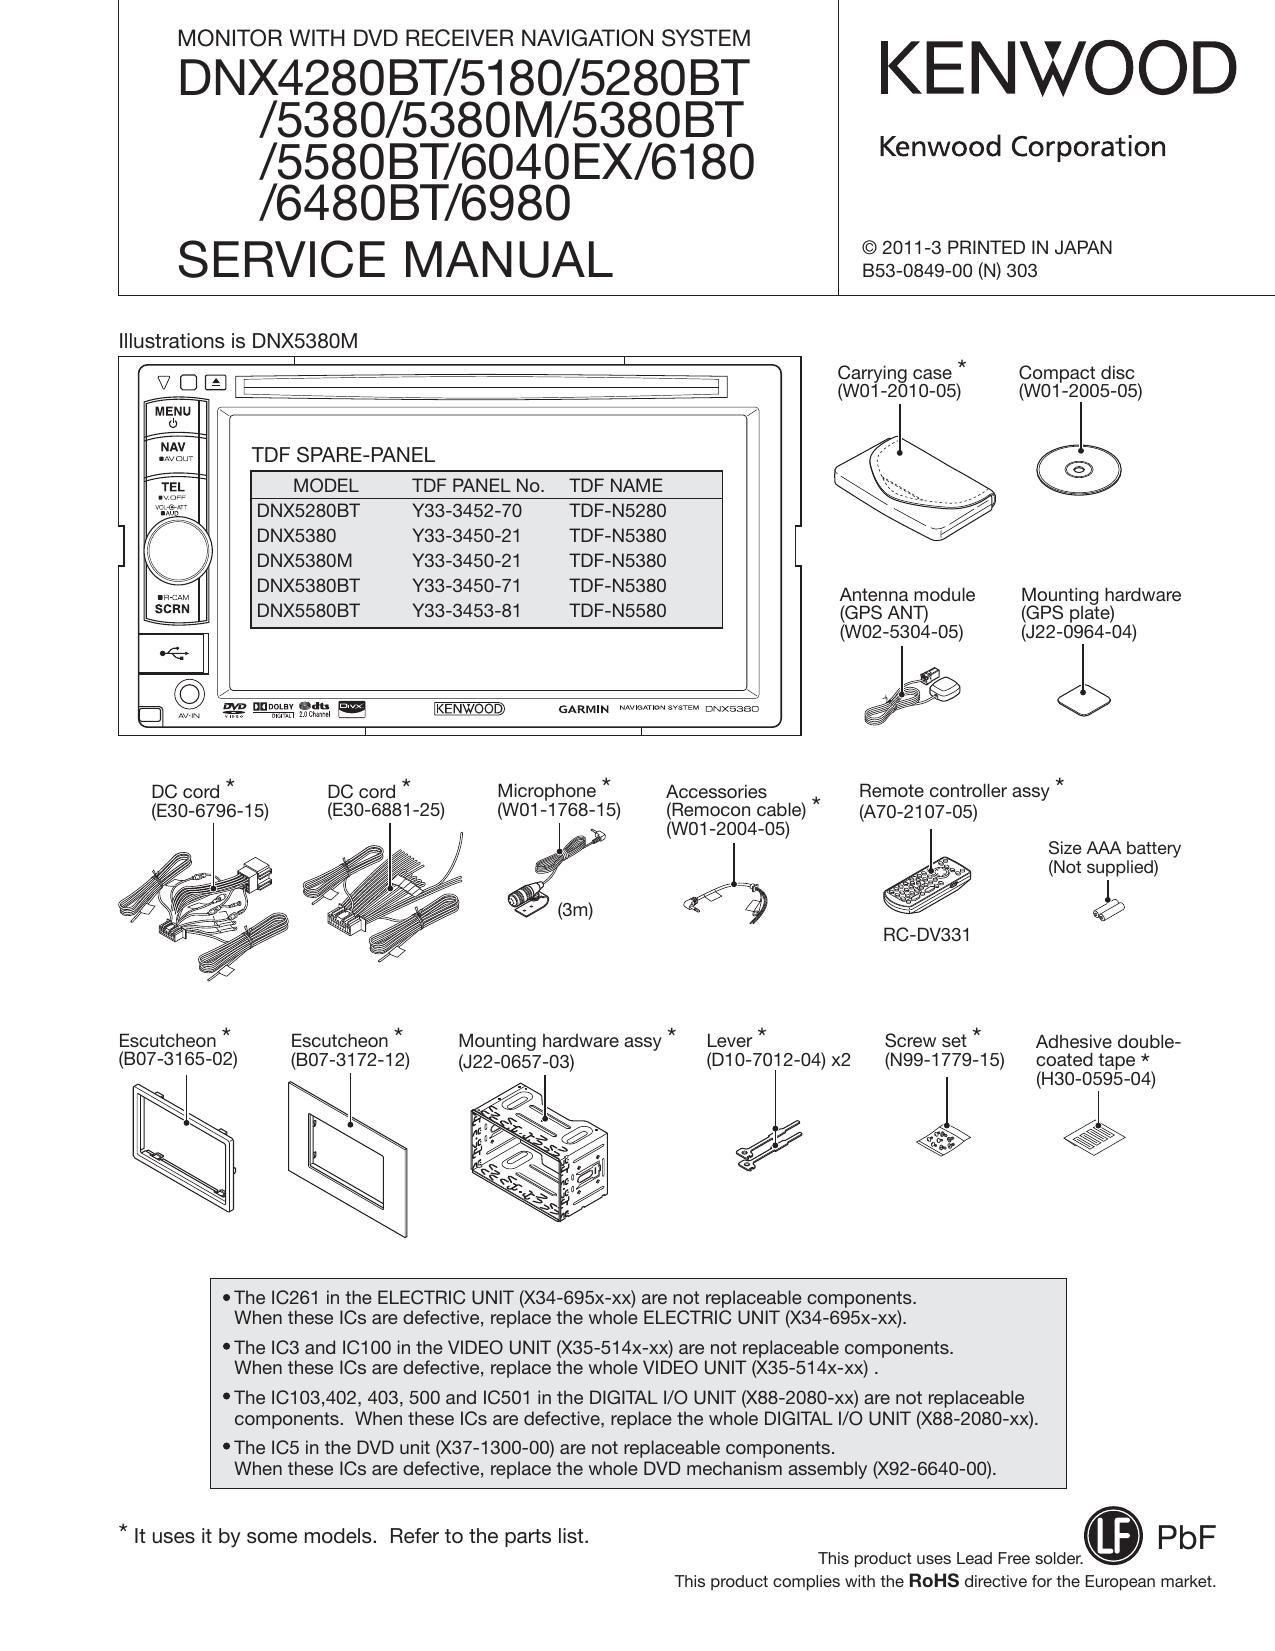 Kenwood DNX 5380 BT Service Manual